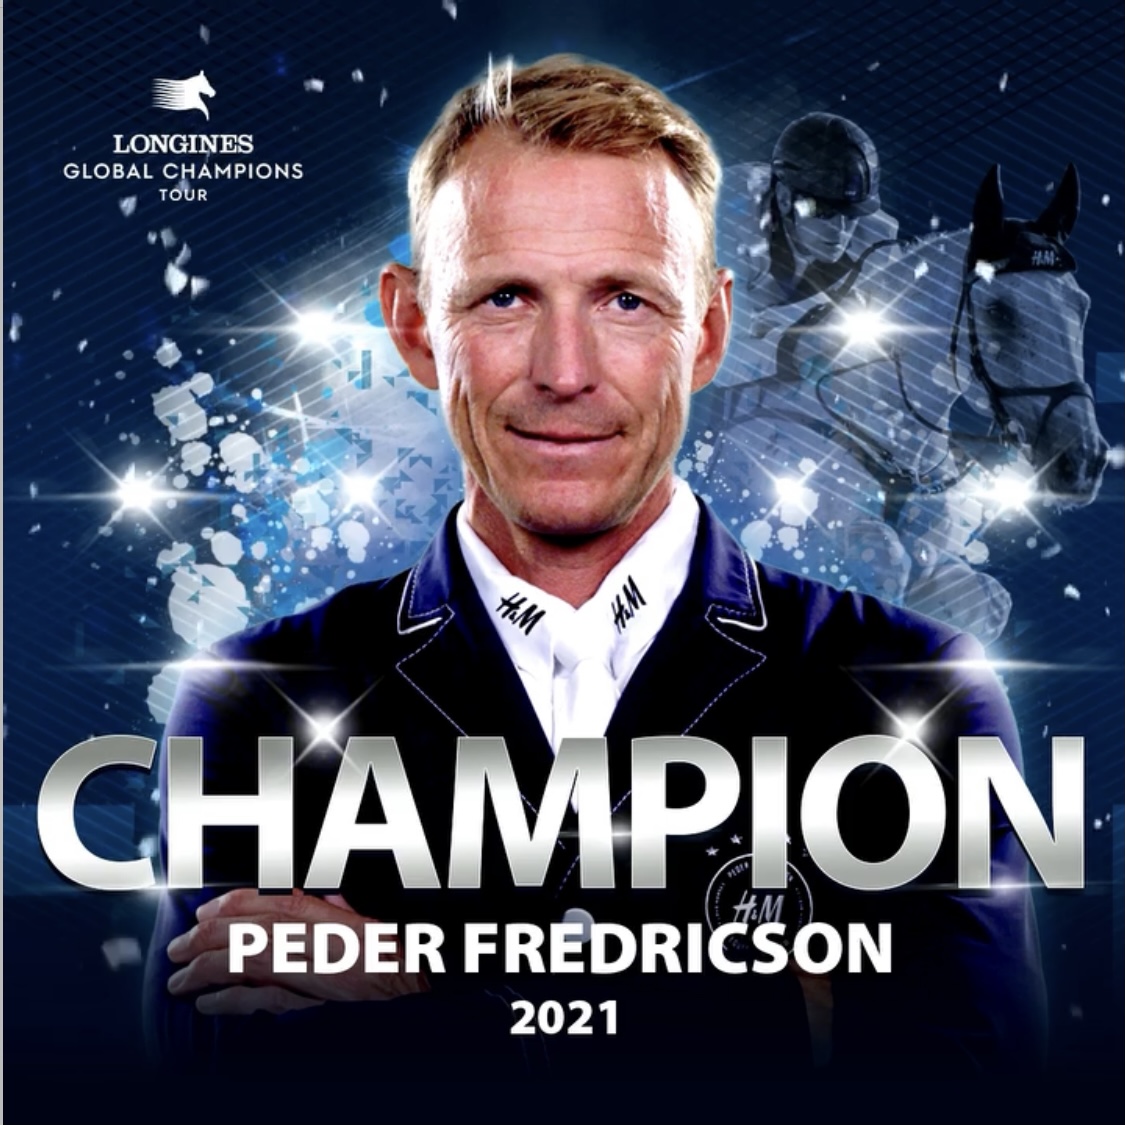 Peder Fredricson is the 2021 Global Champions Tour winner